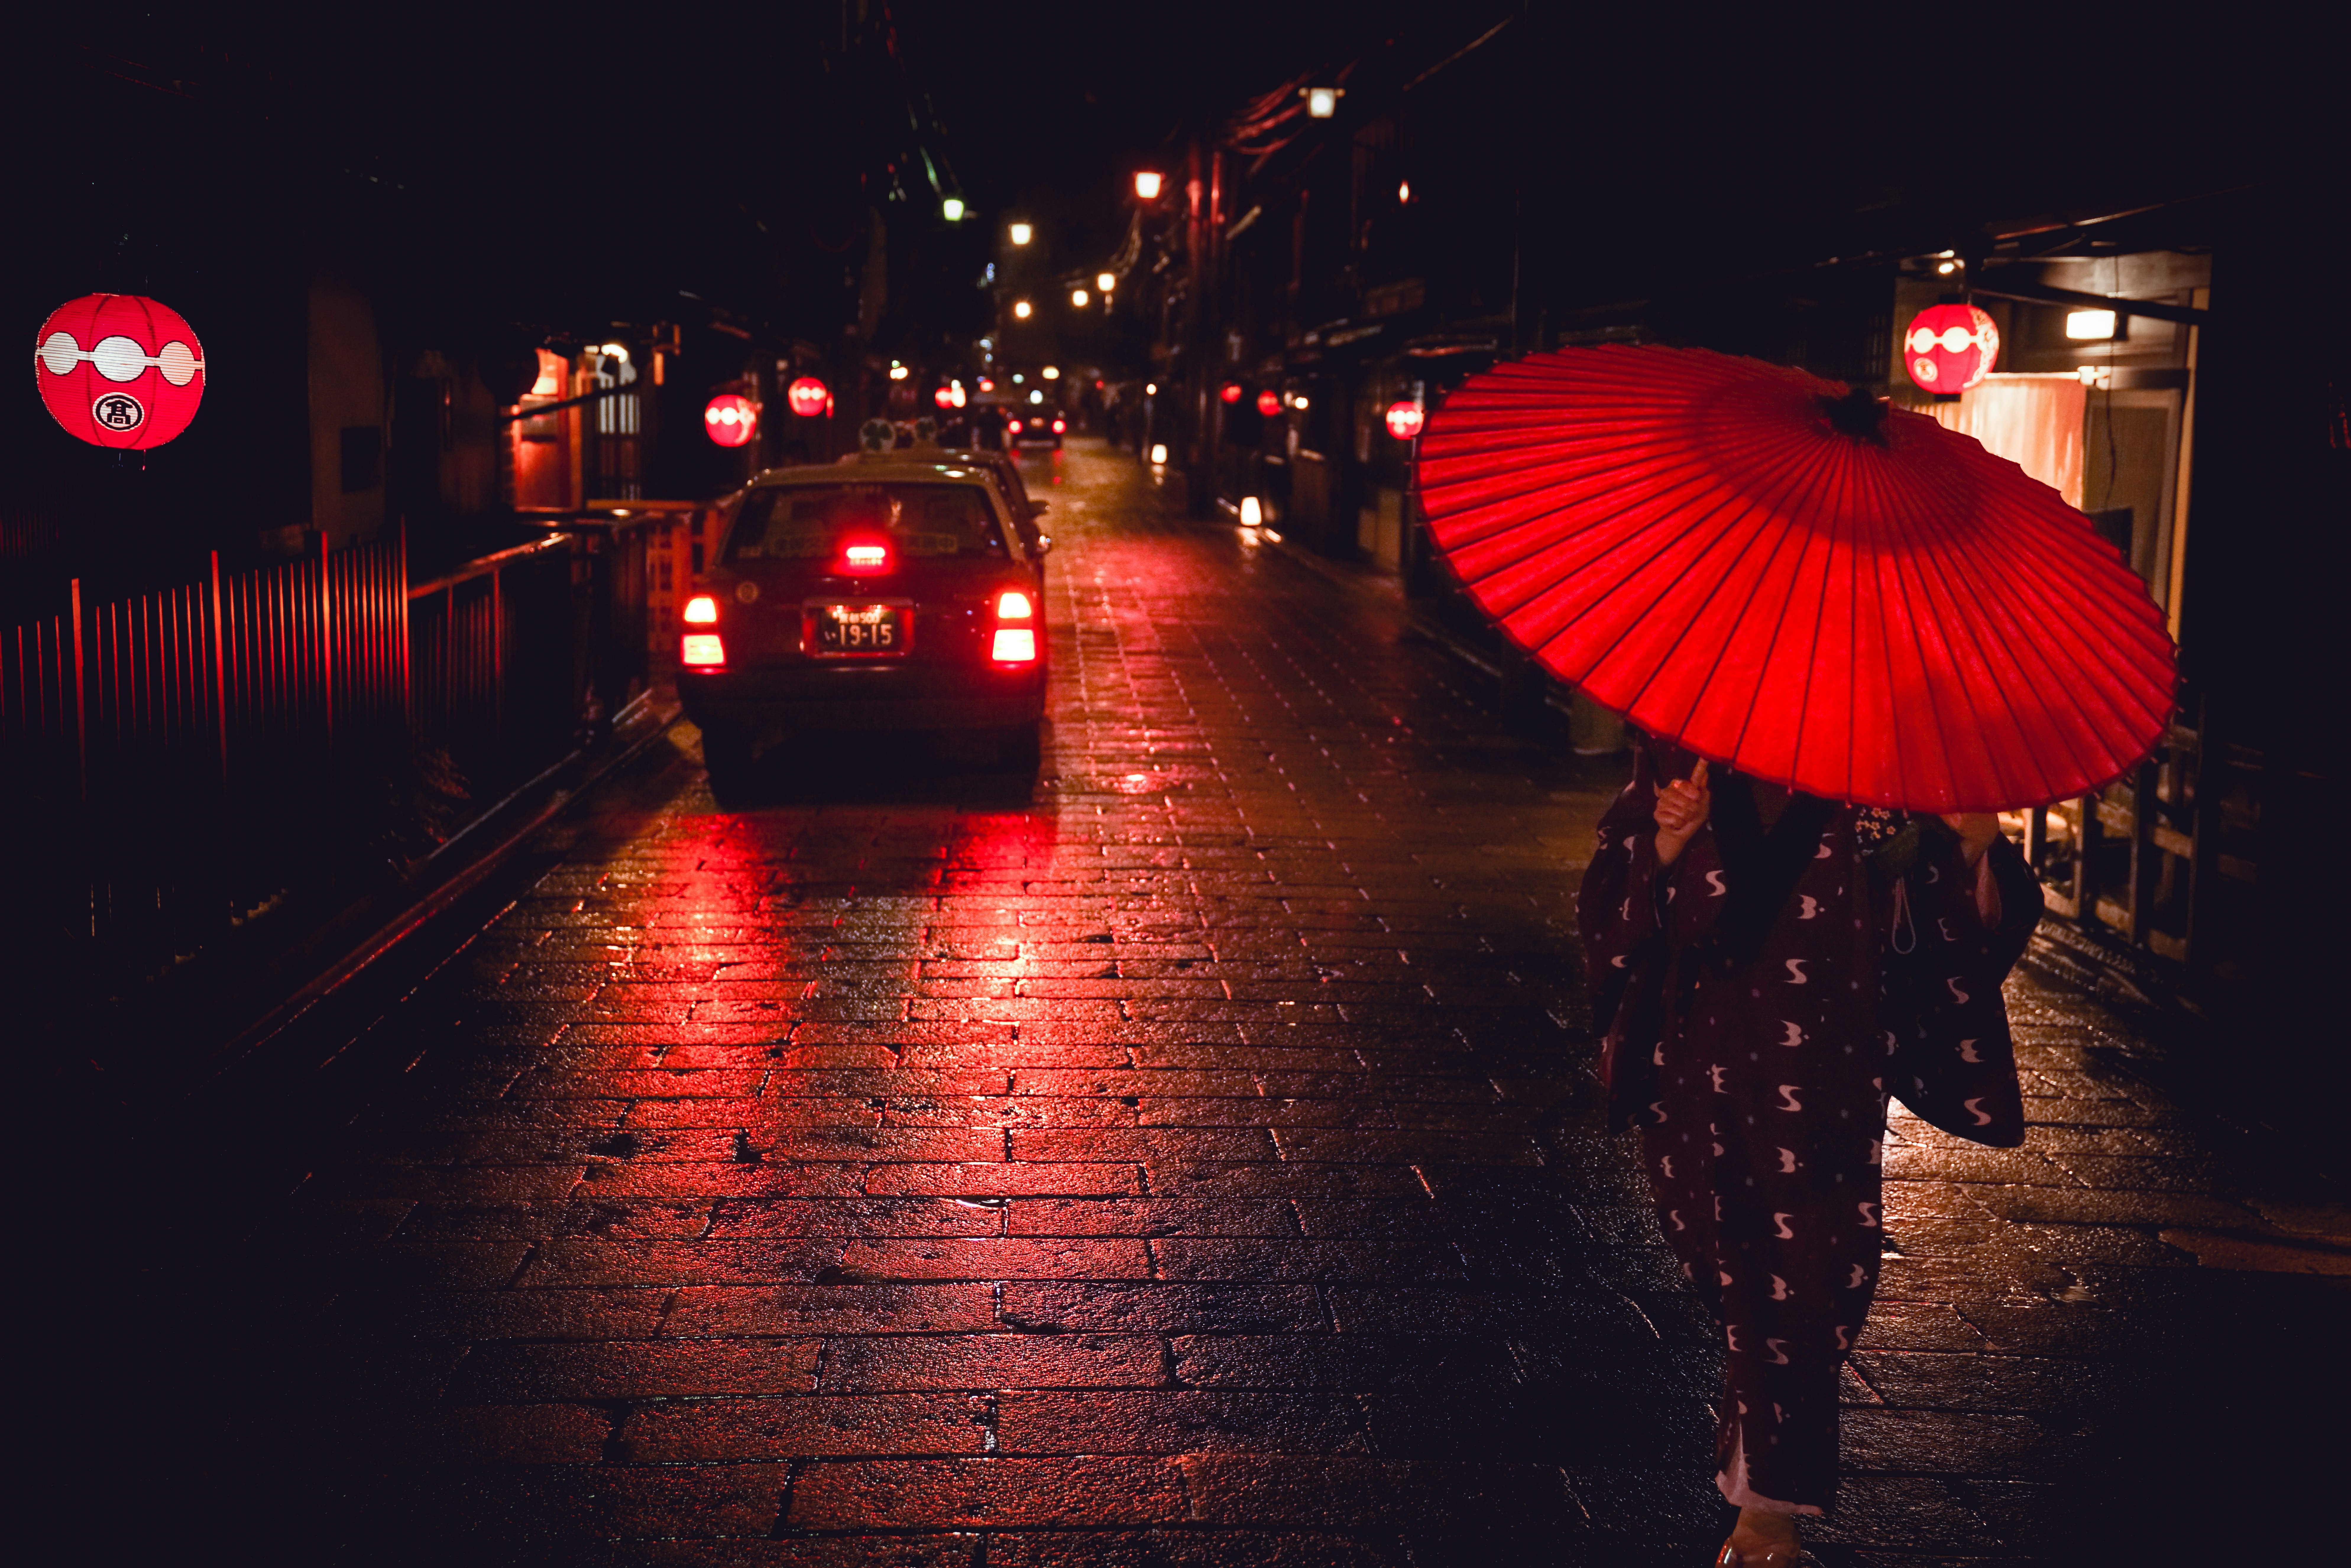 A Geisha walks through Gion at night